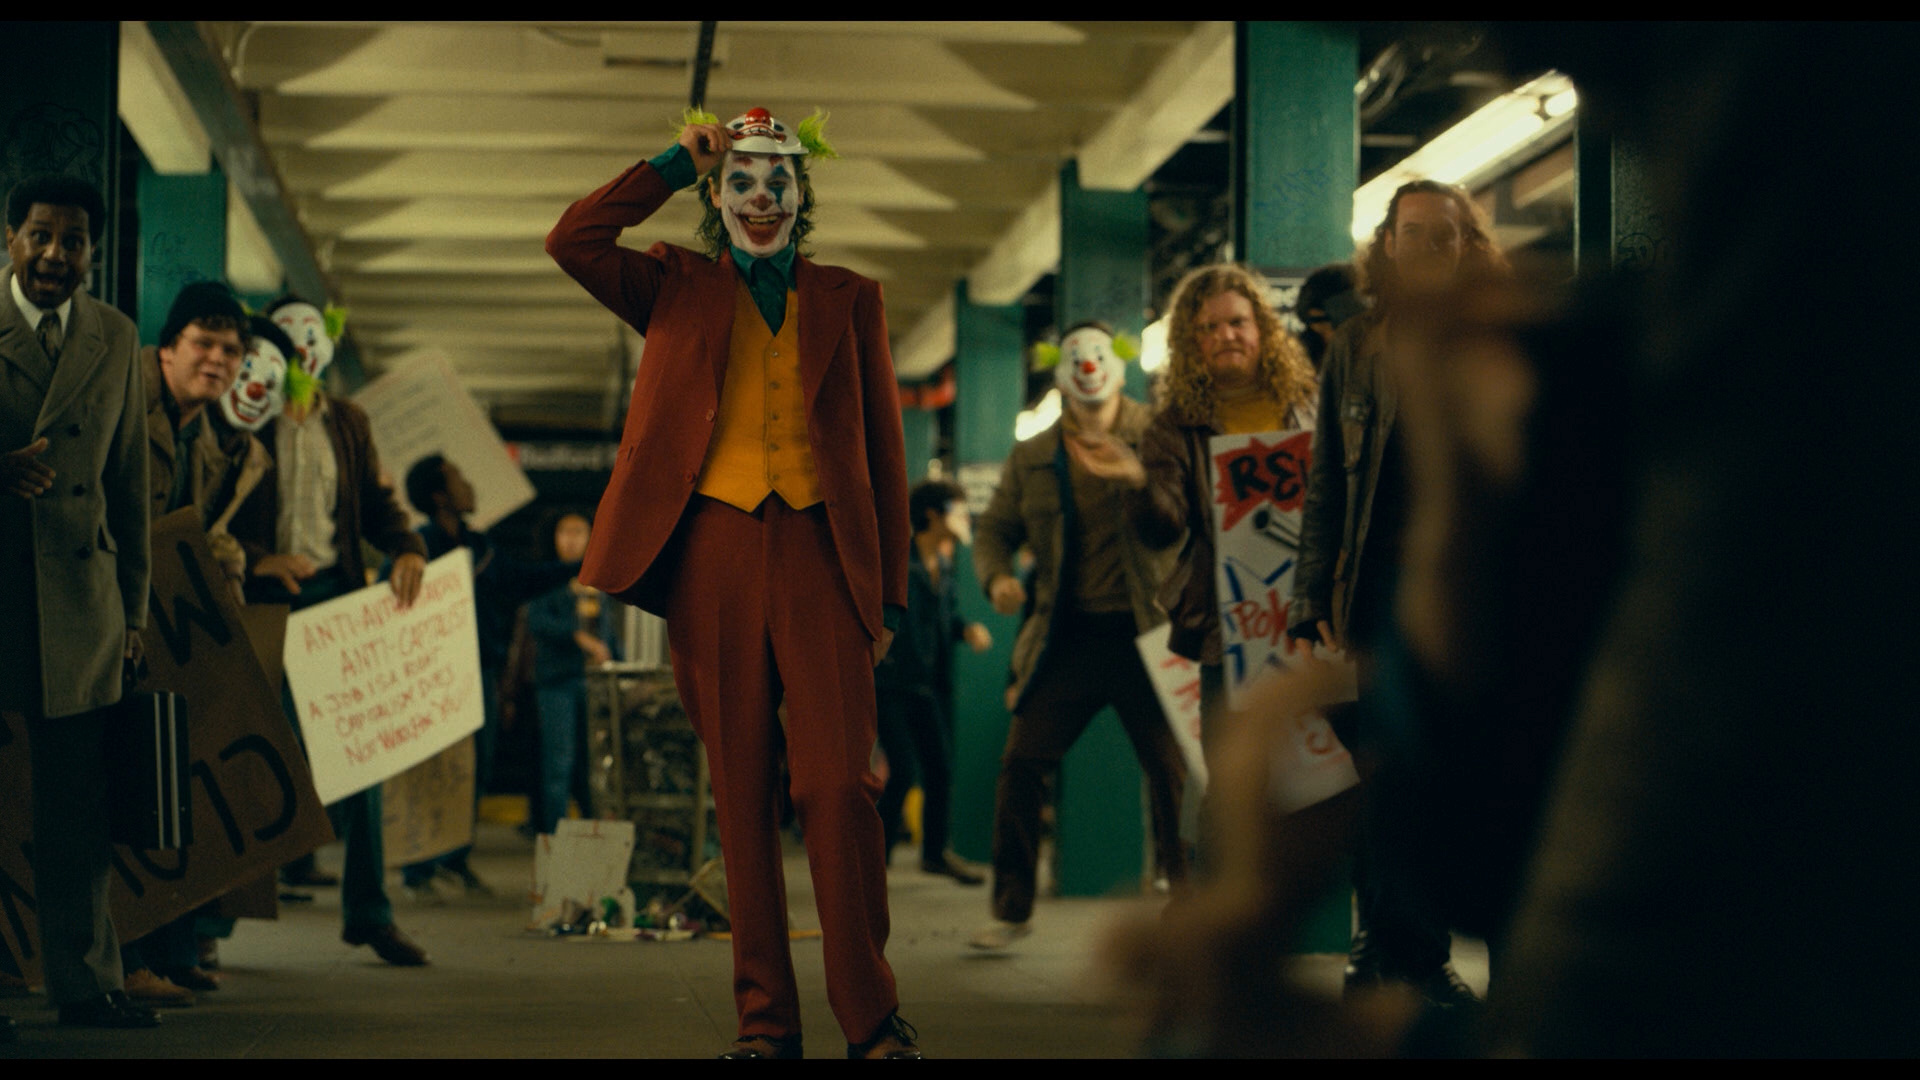 People 1920x1080 Joker (2019 Movie) Joker Joaquin Phoenix men film stills movies DC Comics makeup